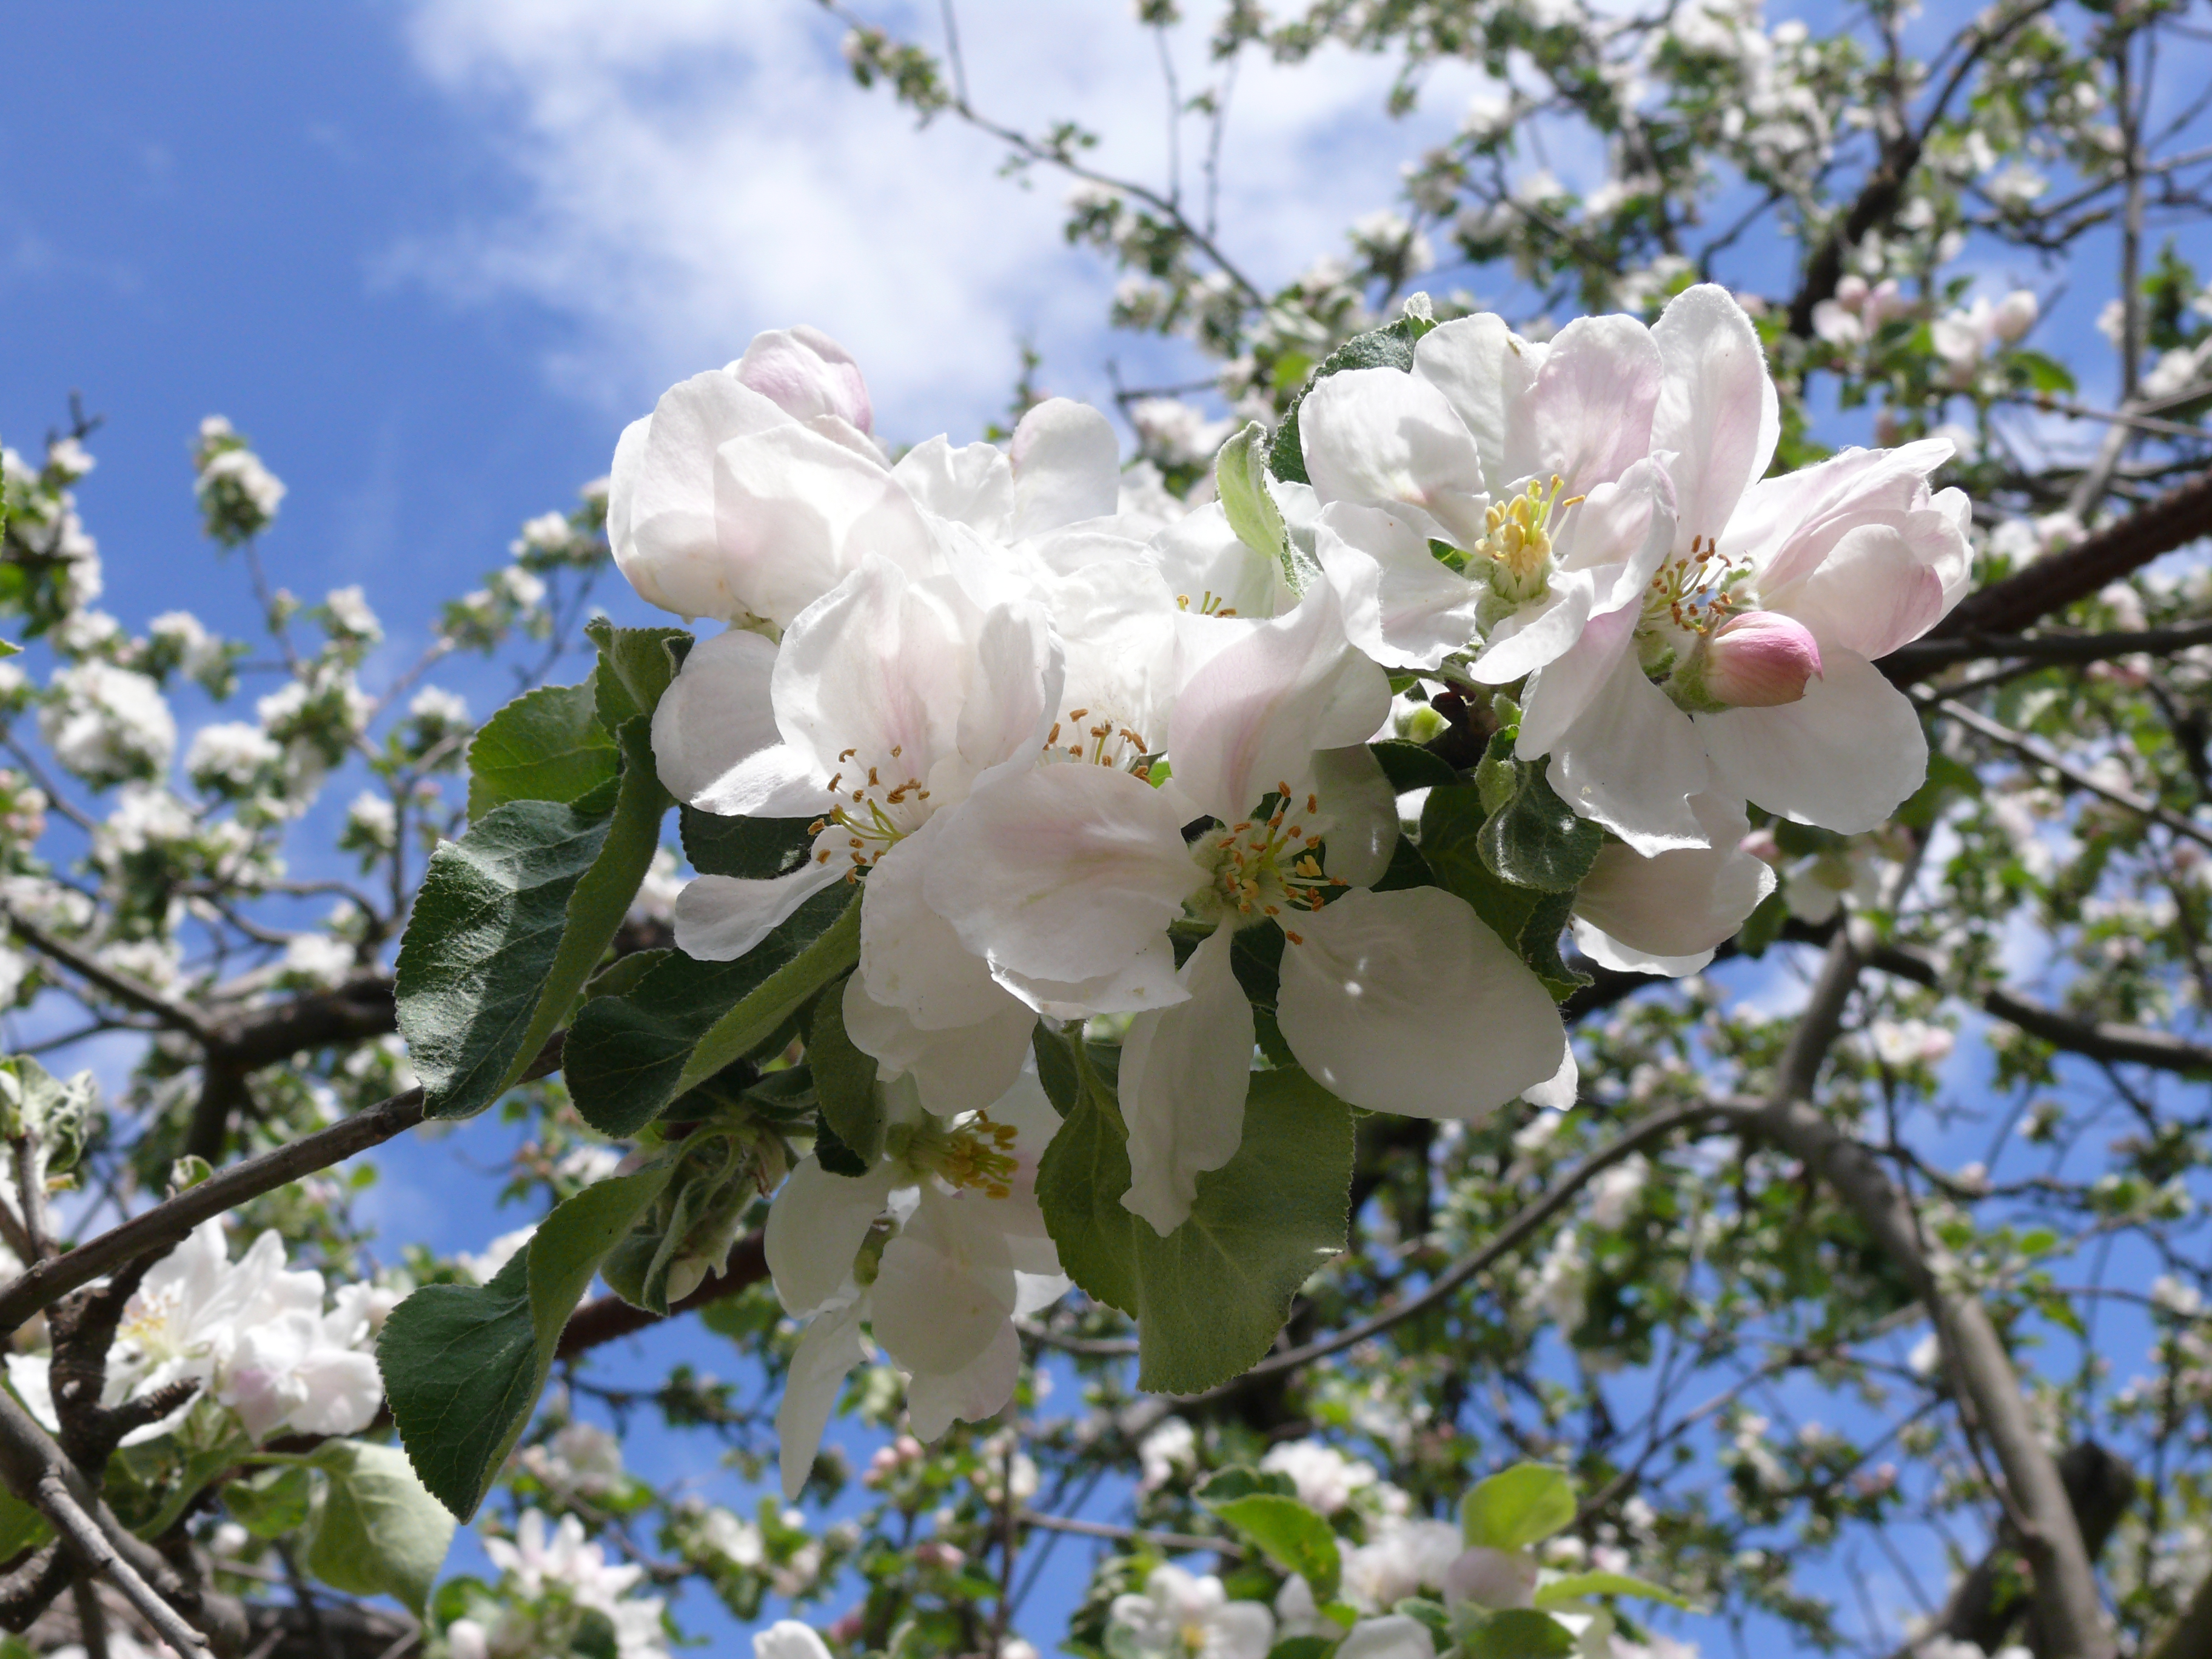 File:Apple priapple tree flower.JPG - Wikimedia Commons